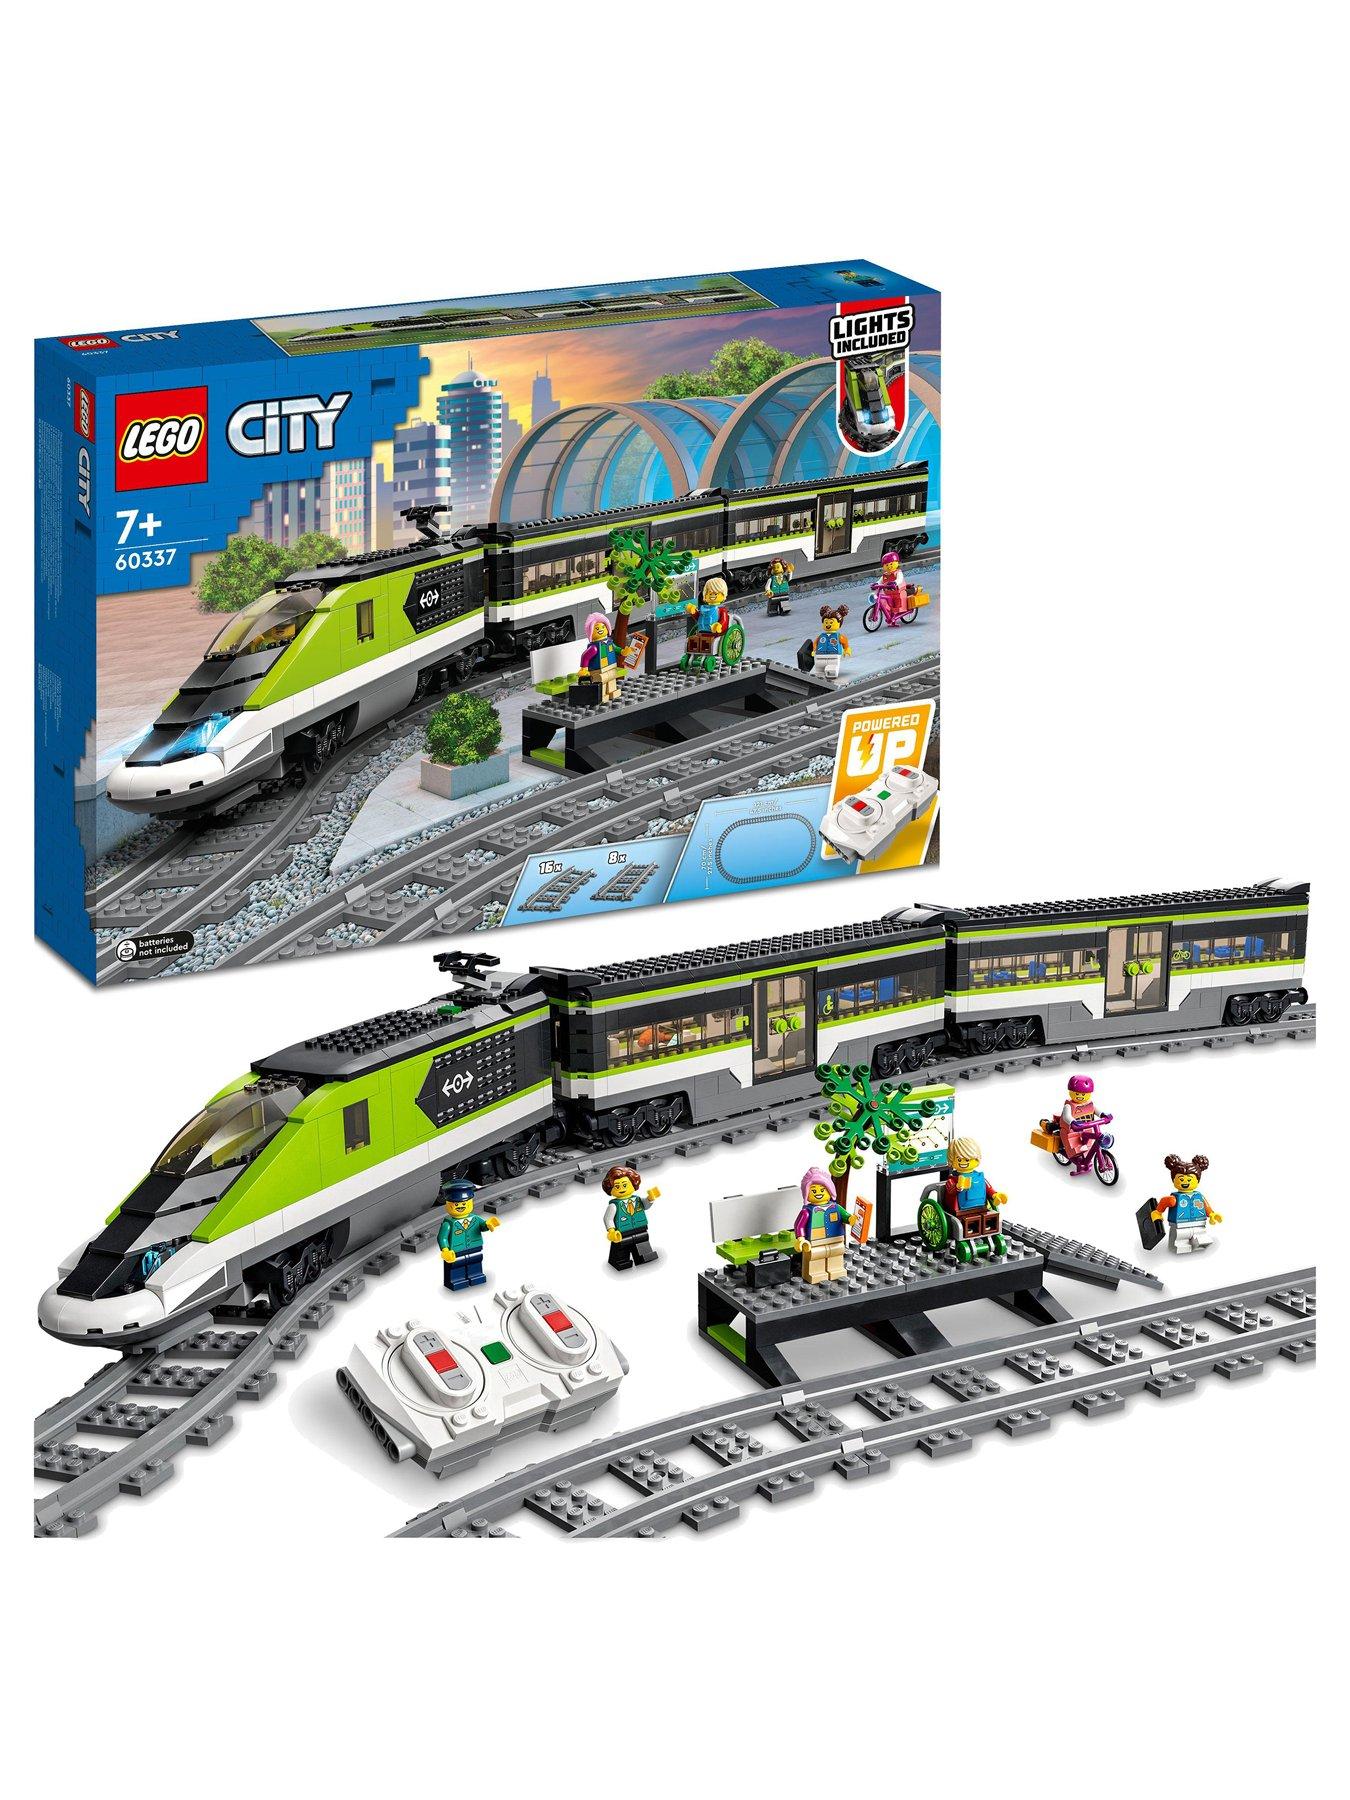 LEGO City Passenger Train |